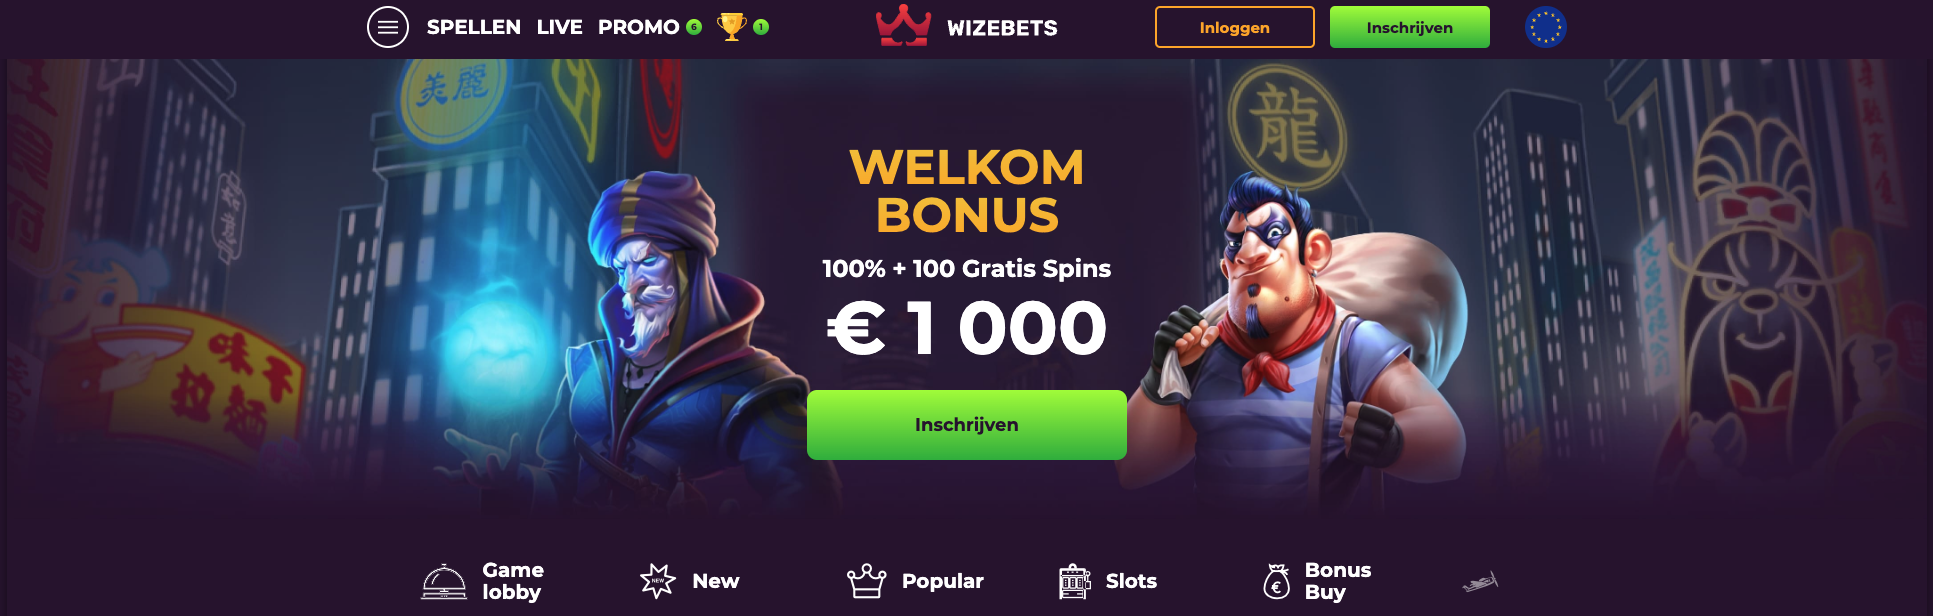 wizebets - online casino zonder nederlandse vergunning